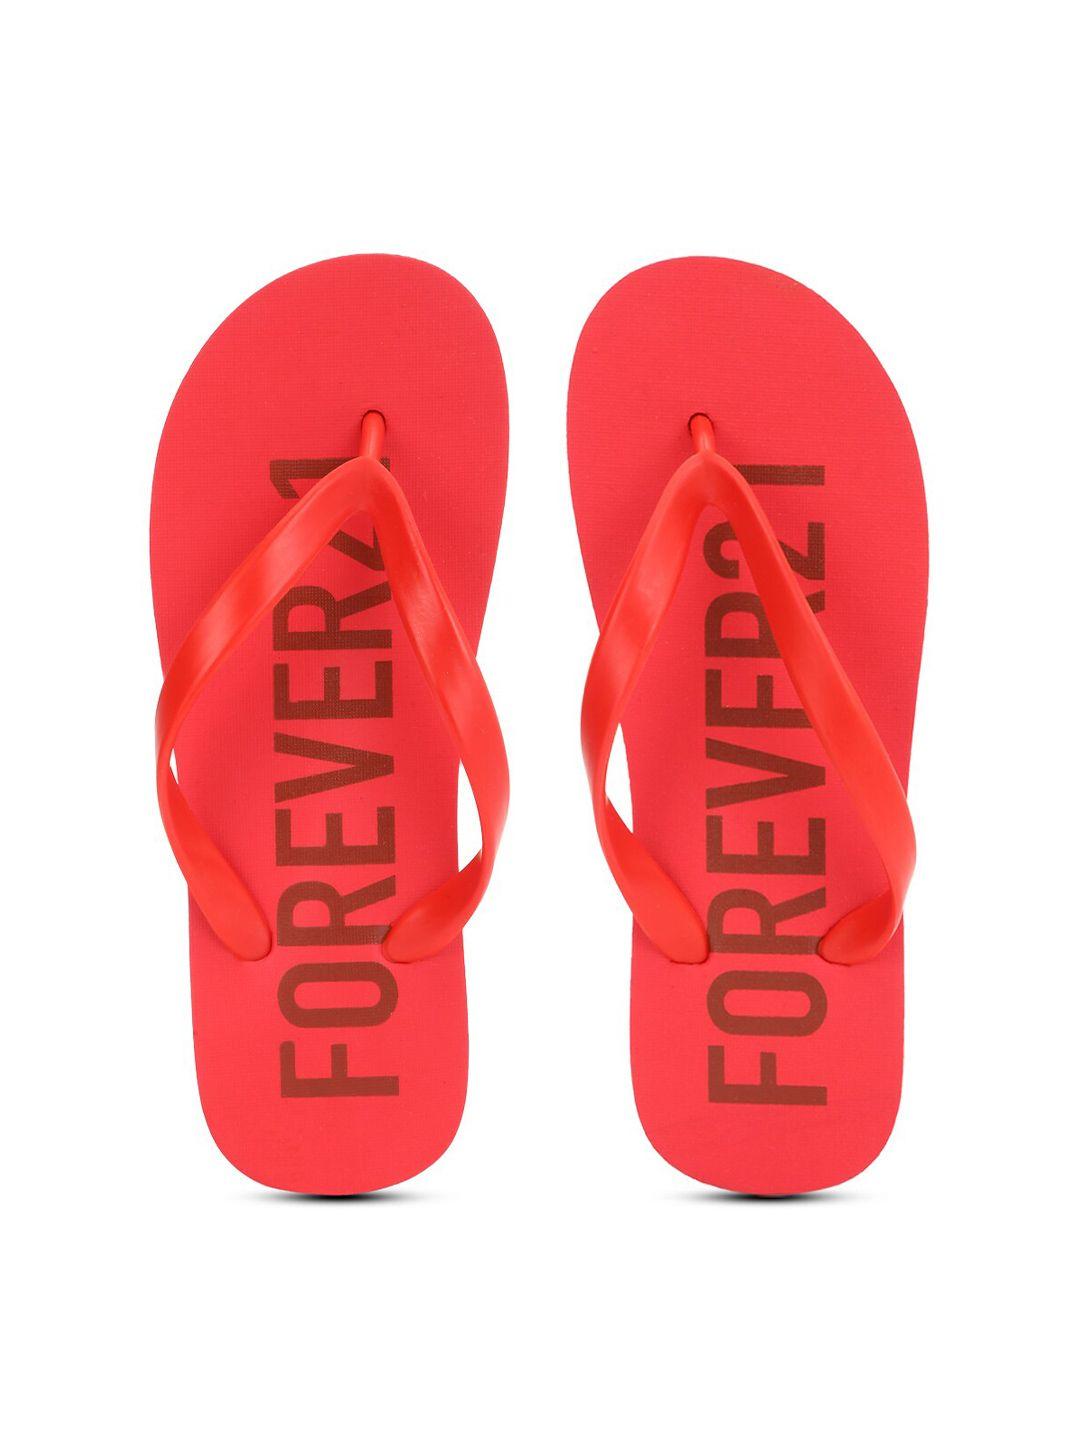 forever-21-men-red-printed-rubber-thong-flip-flops